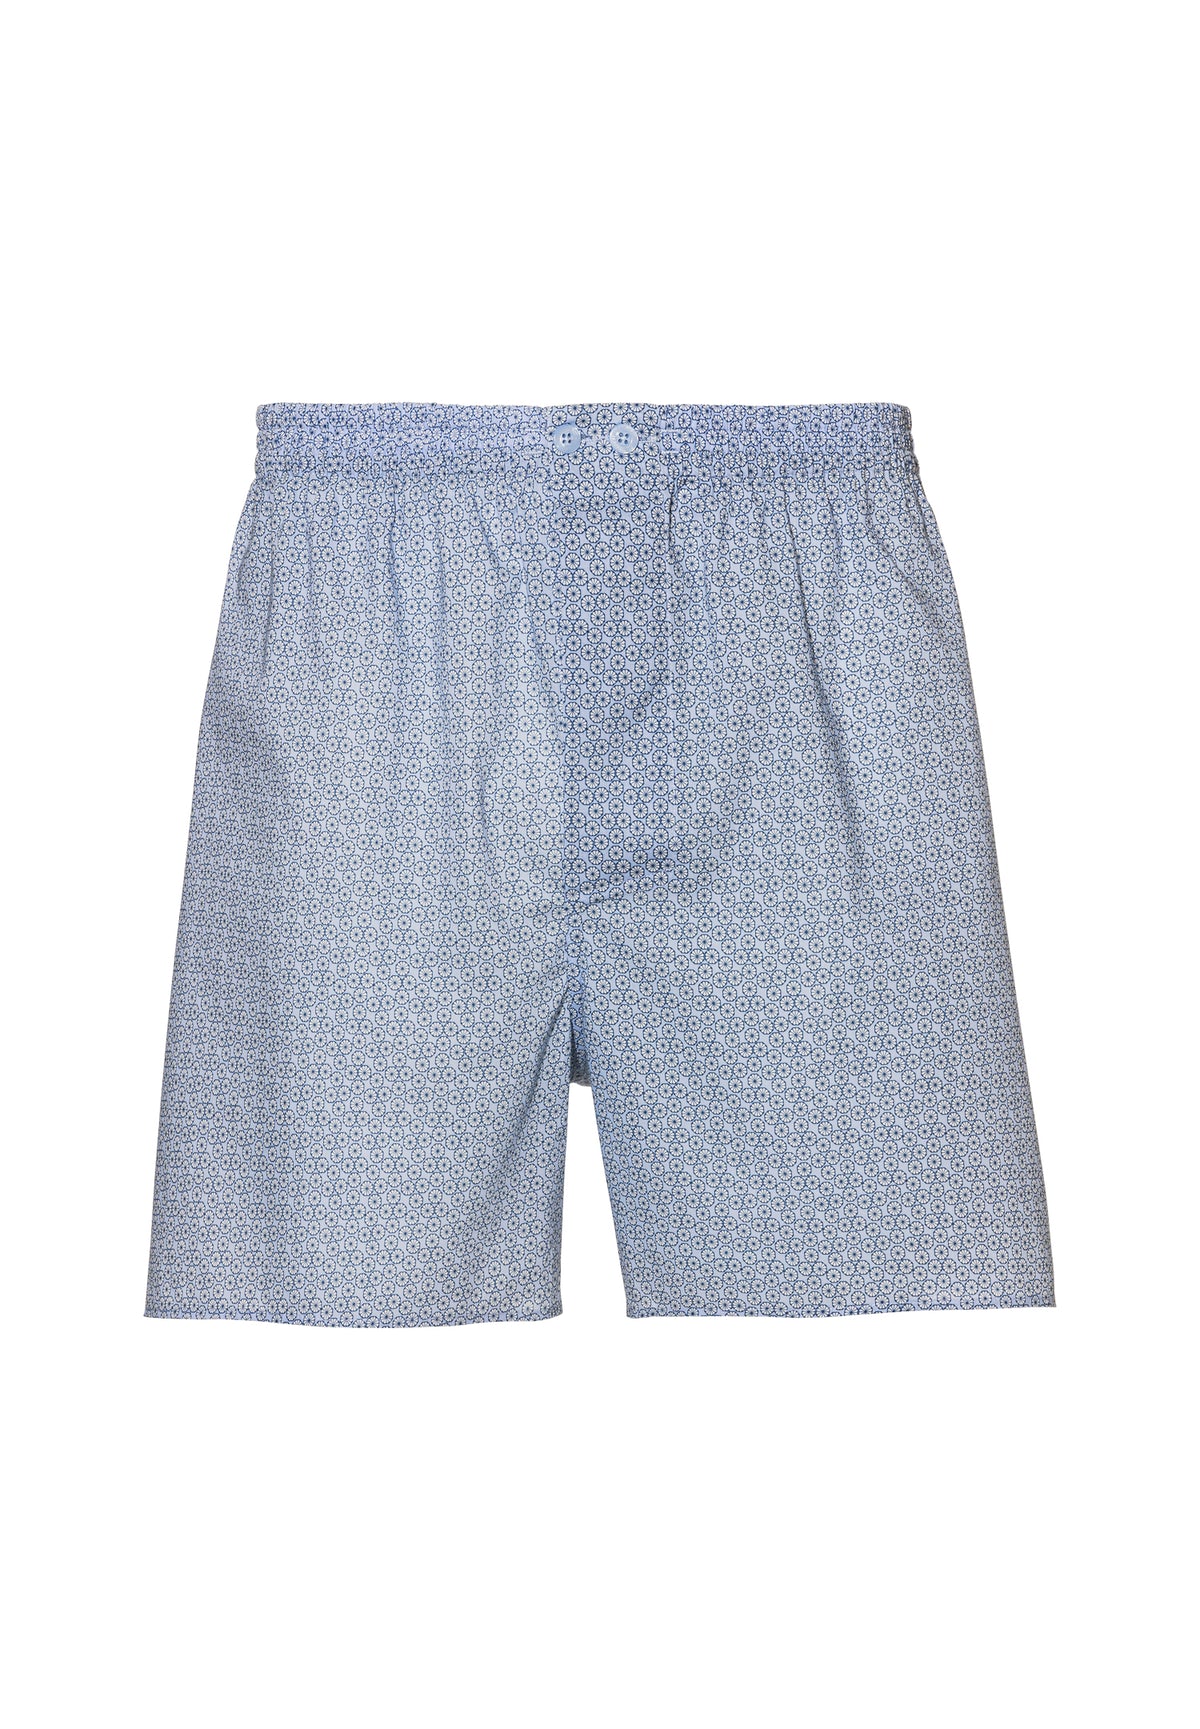 Cotton Voile Print | Boxer Shorts - ditsy-geo light blue